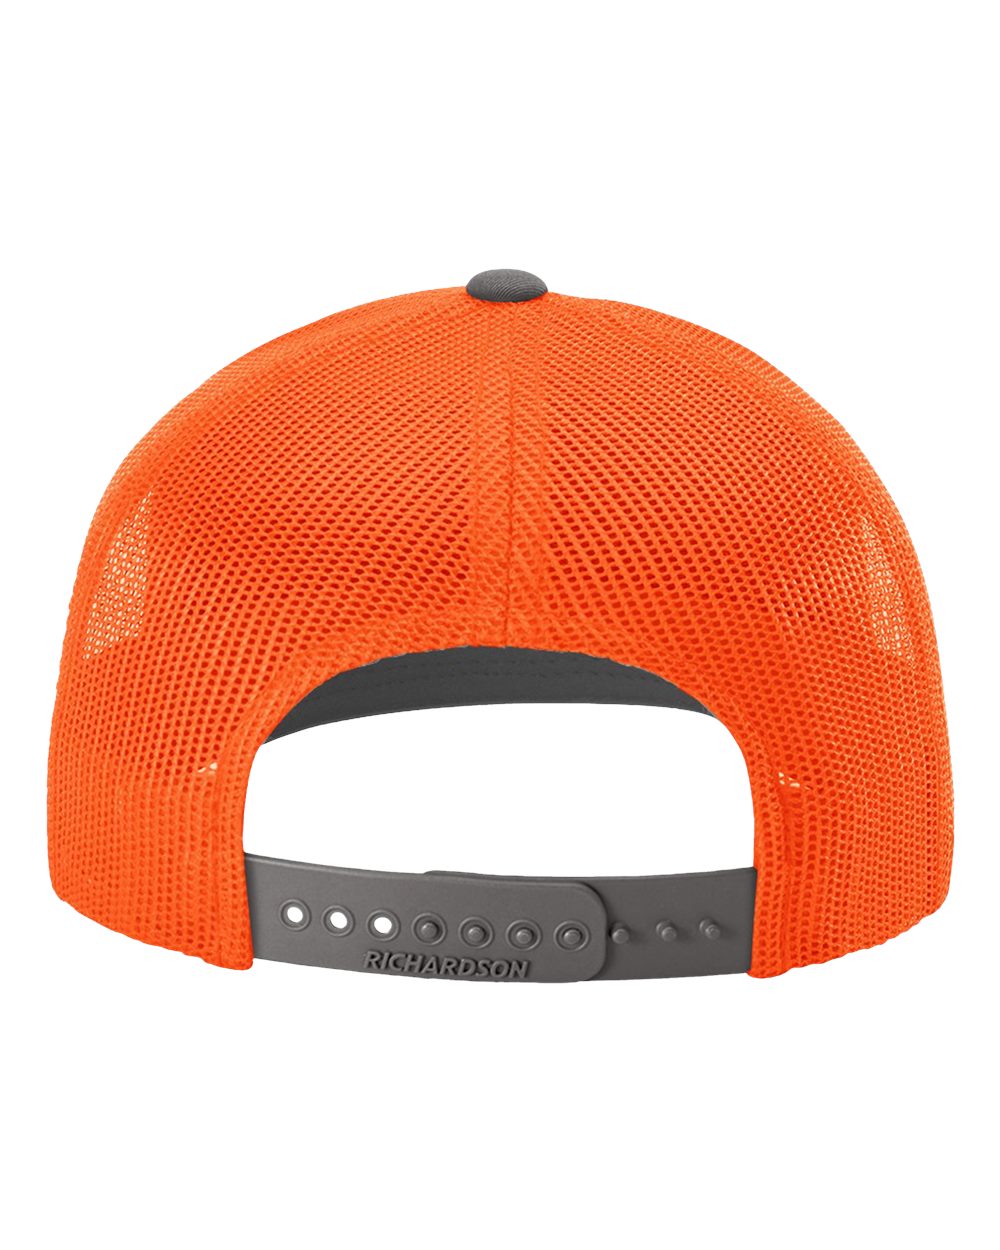 Richardson Adjustable Customized Snapback Trucker Caps, Charcoal Neon Orange